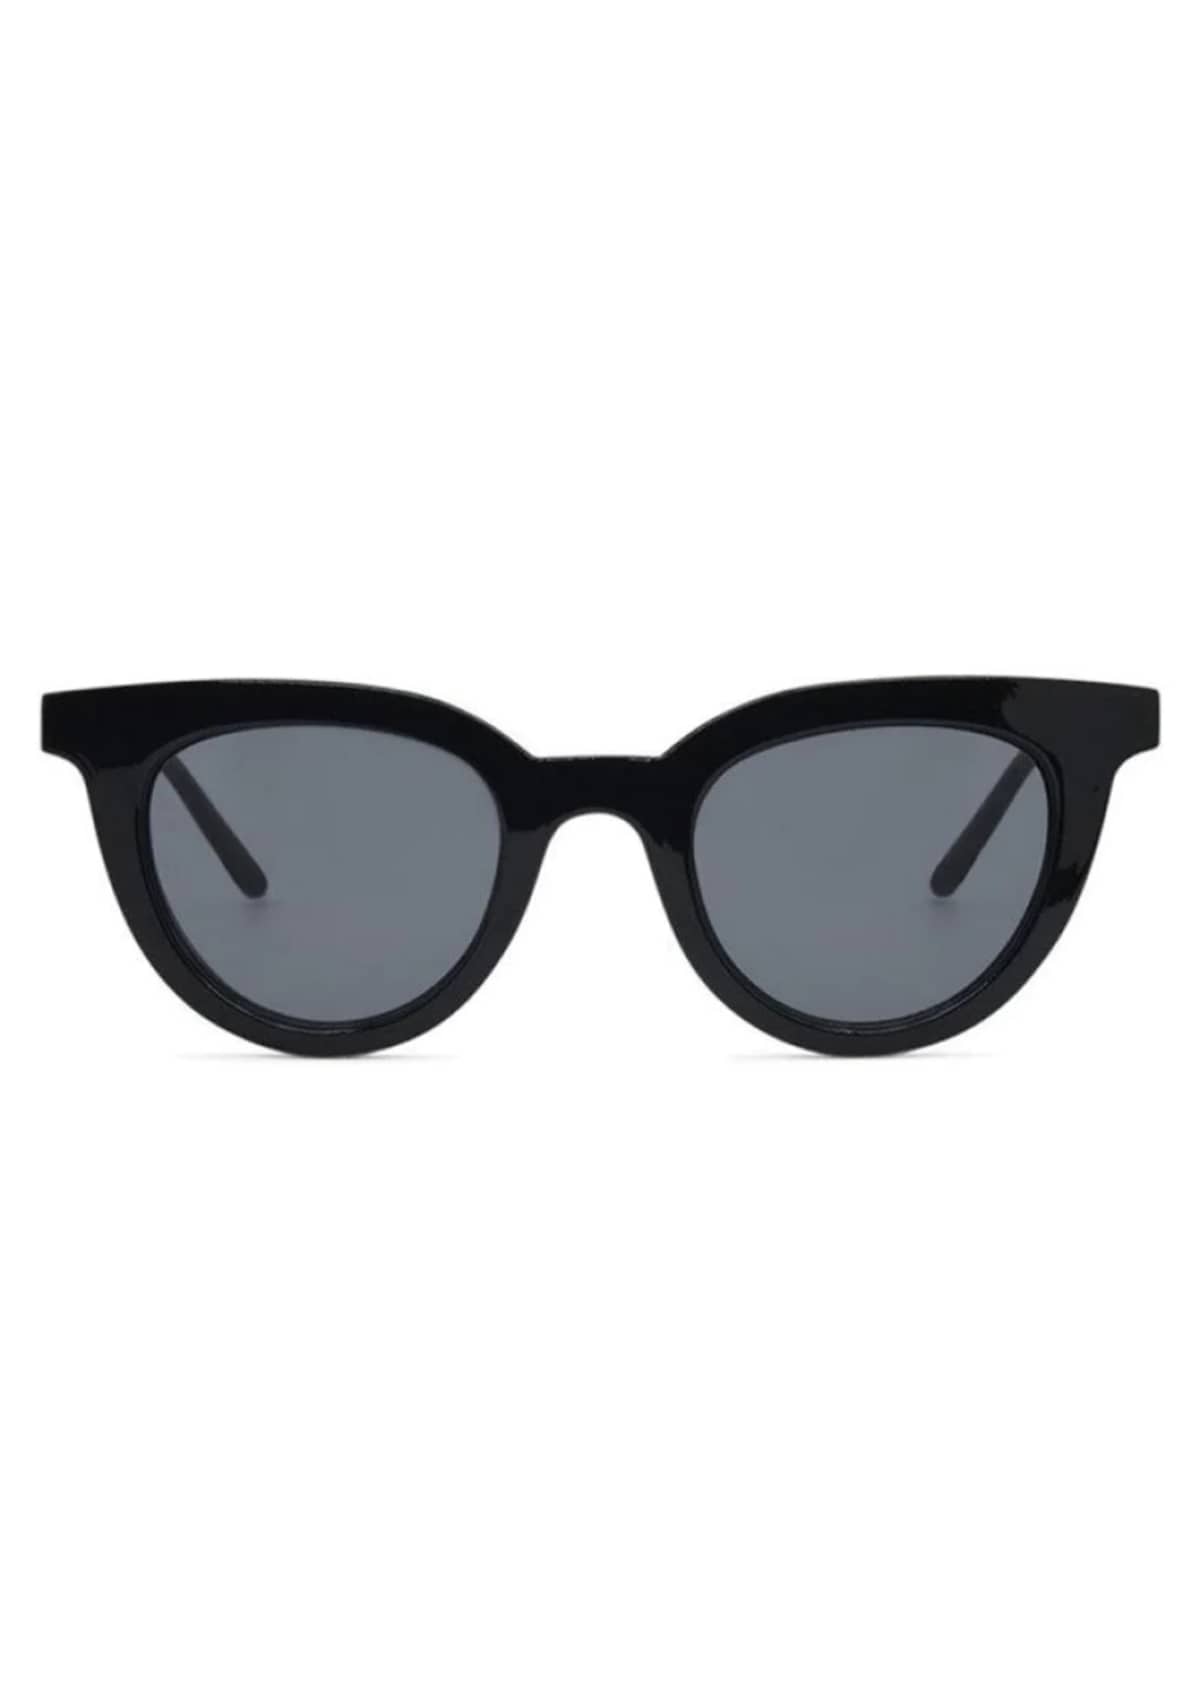 Accessories-Fashion-Sunglasses-Ruby Jane.